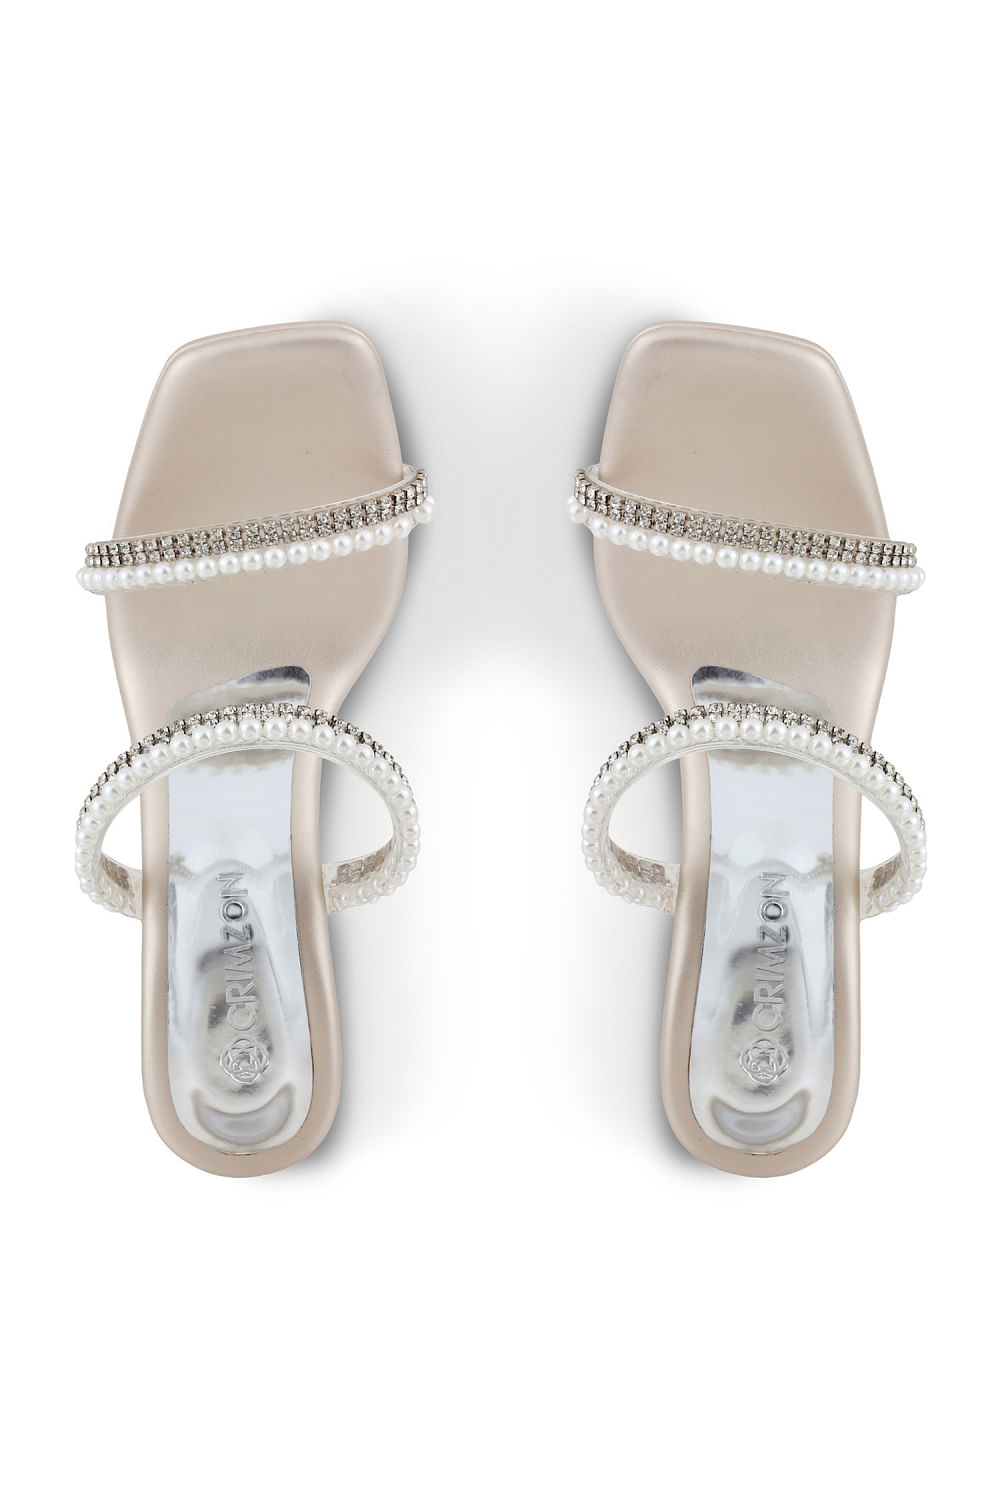 Christian Louboutin | Shoes | Authentic Louboutin Heels Beige Closed Toe  Mesh Diamond Studded Cross Strap | Poshmark